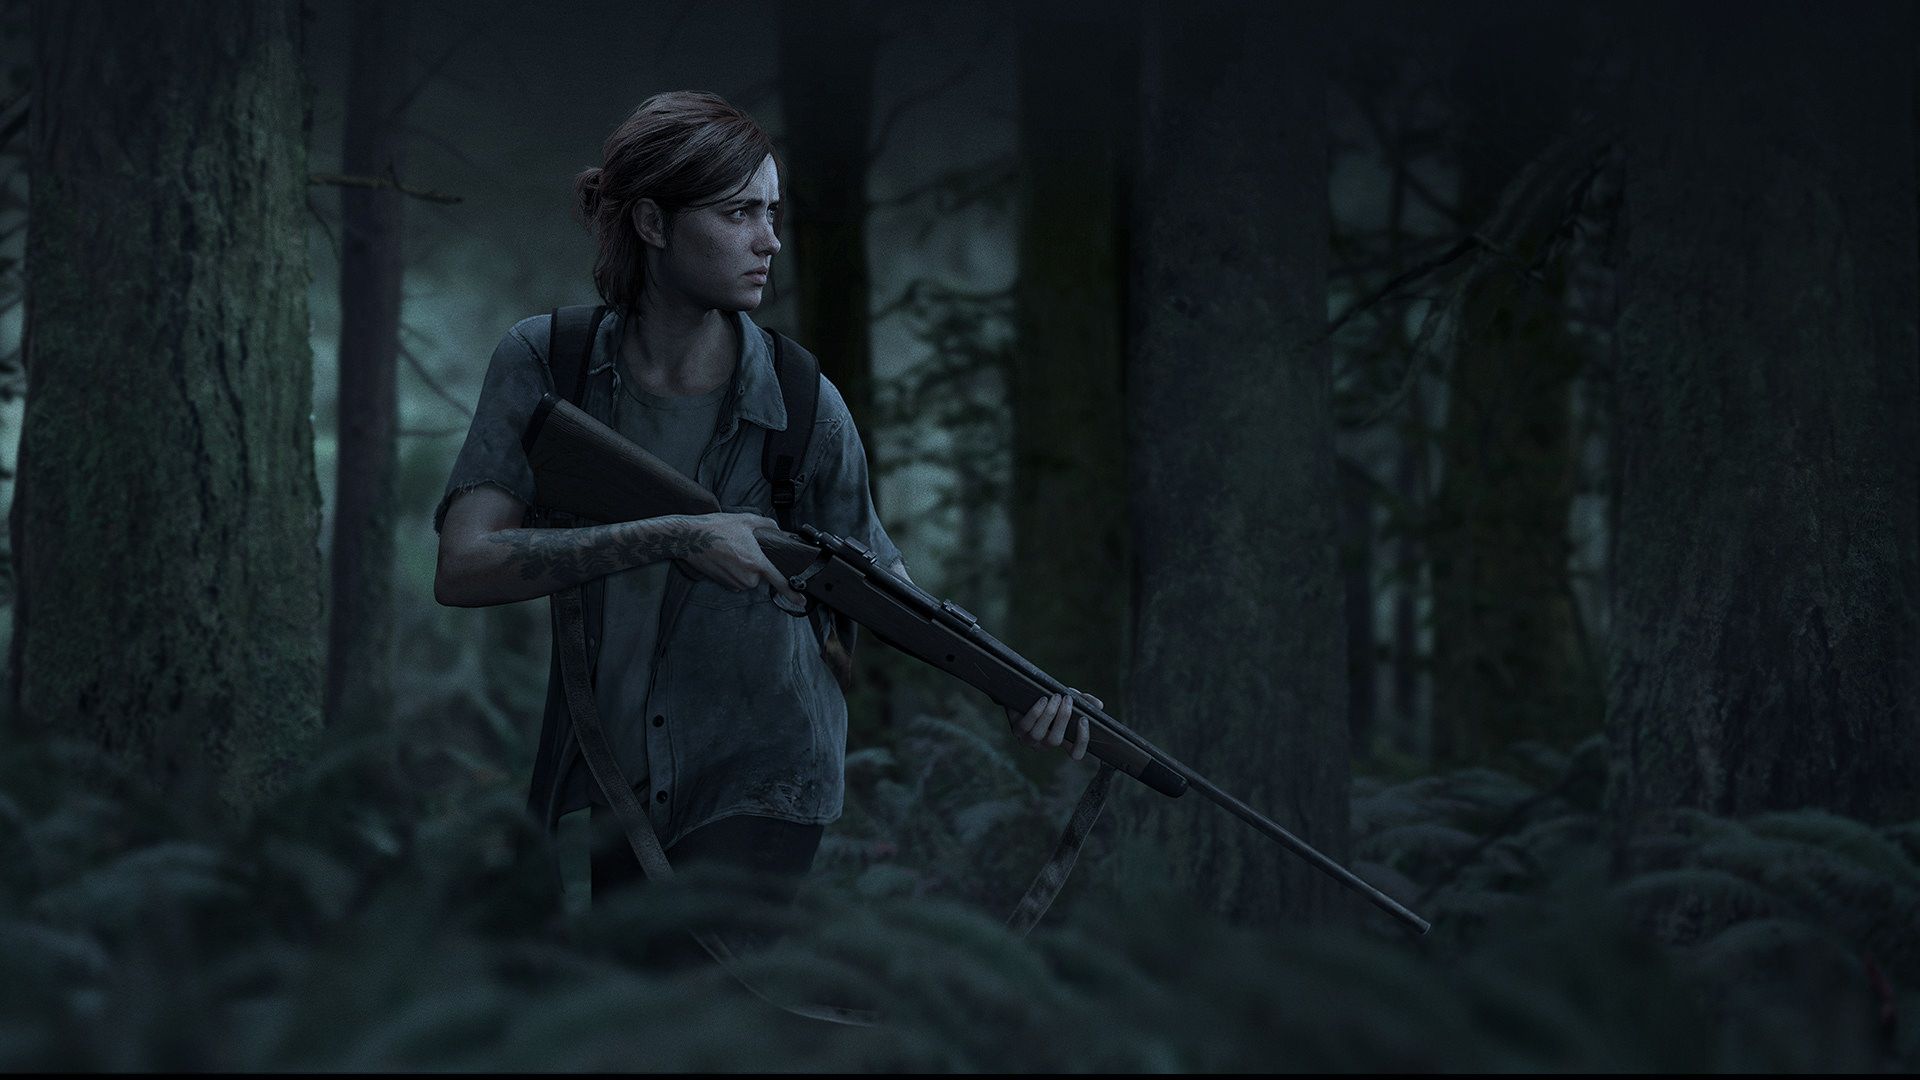 The Last of Us II ขึ้นแท่น Game of the Year พร้อมคว้ารางวัลอีก 6 สาขา จากงาน The Game Awards 2020